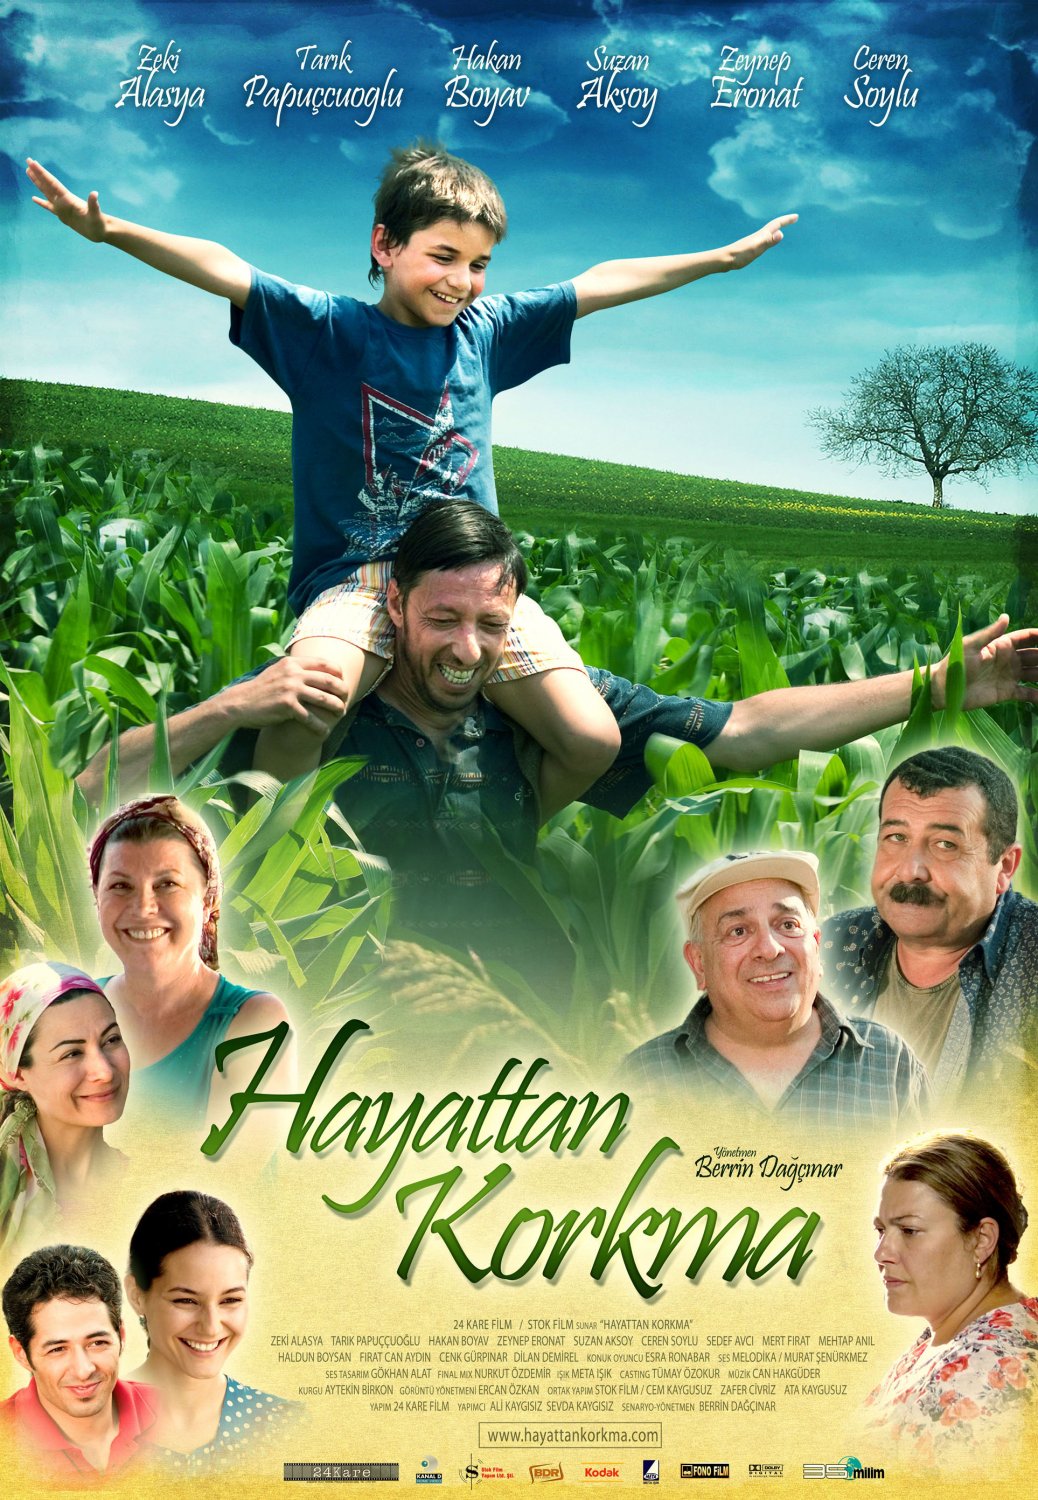 Extra Large Movie Poster Image for Hayattan korkma 